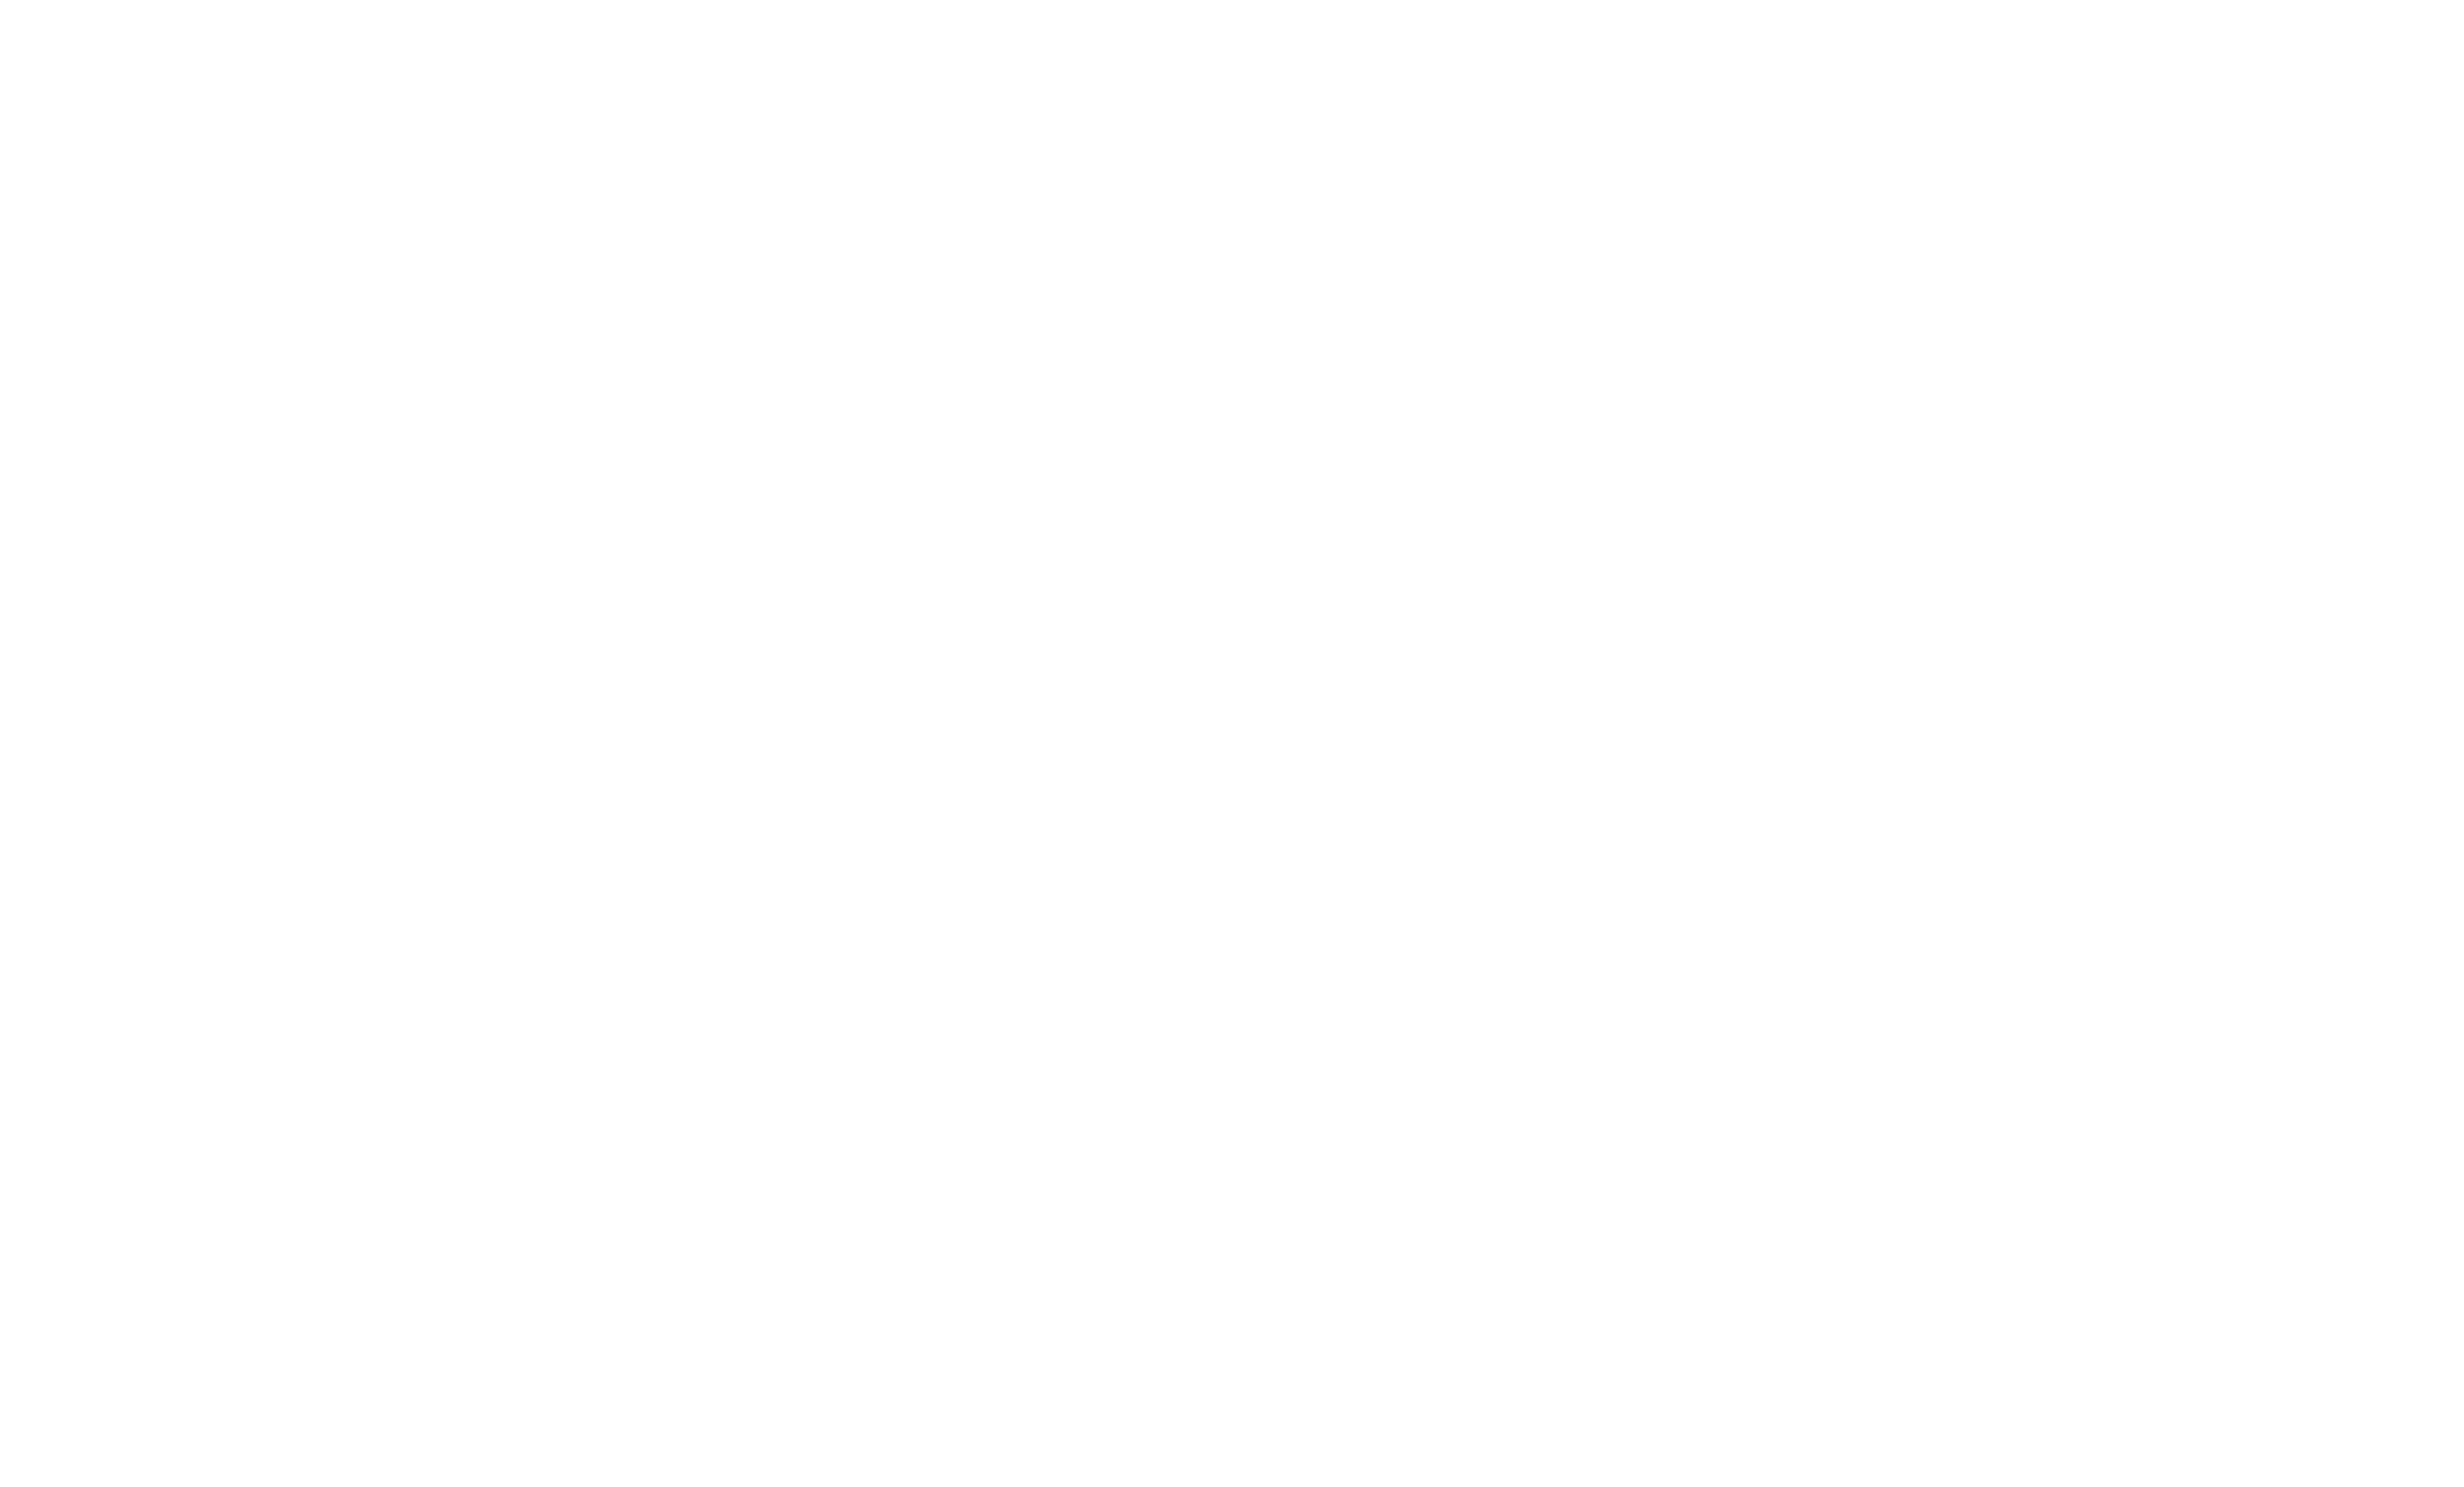 The University of Manchester Students' Union logo.